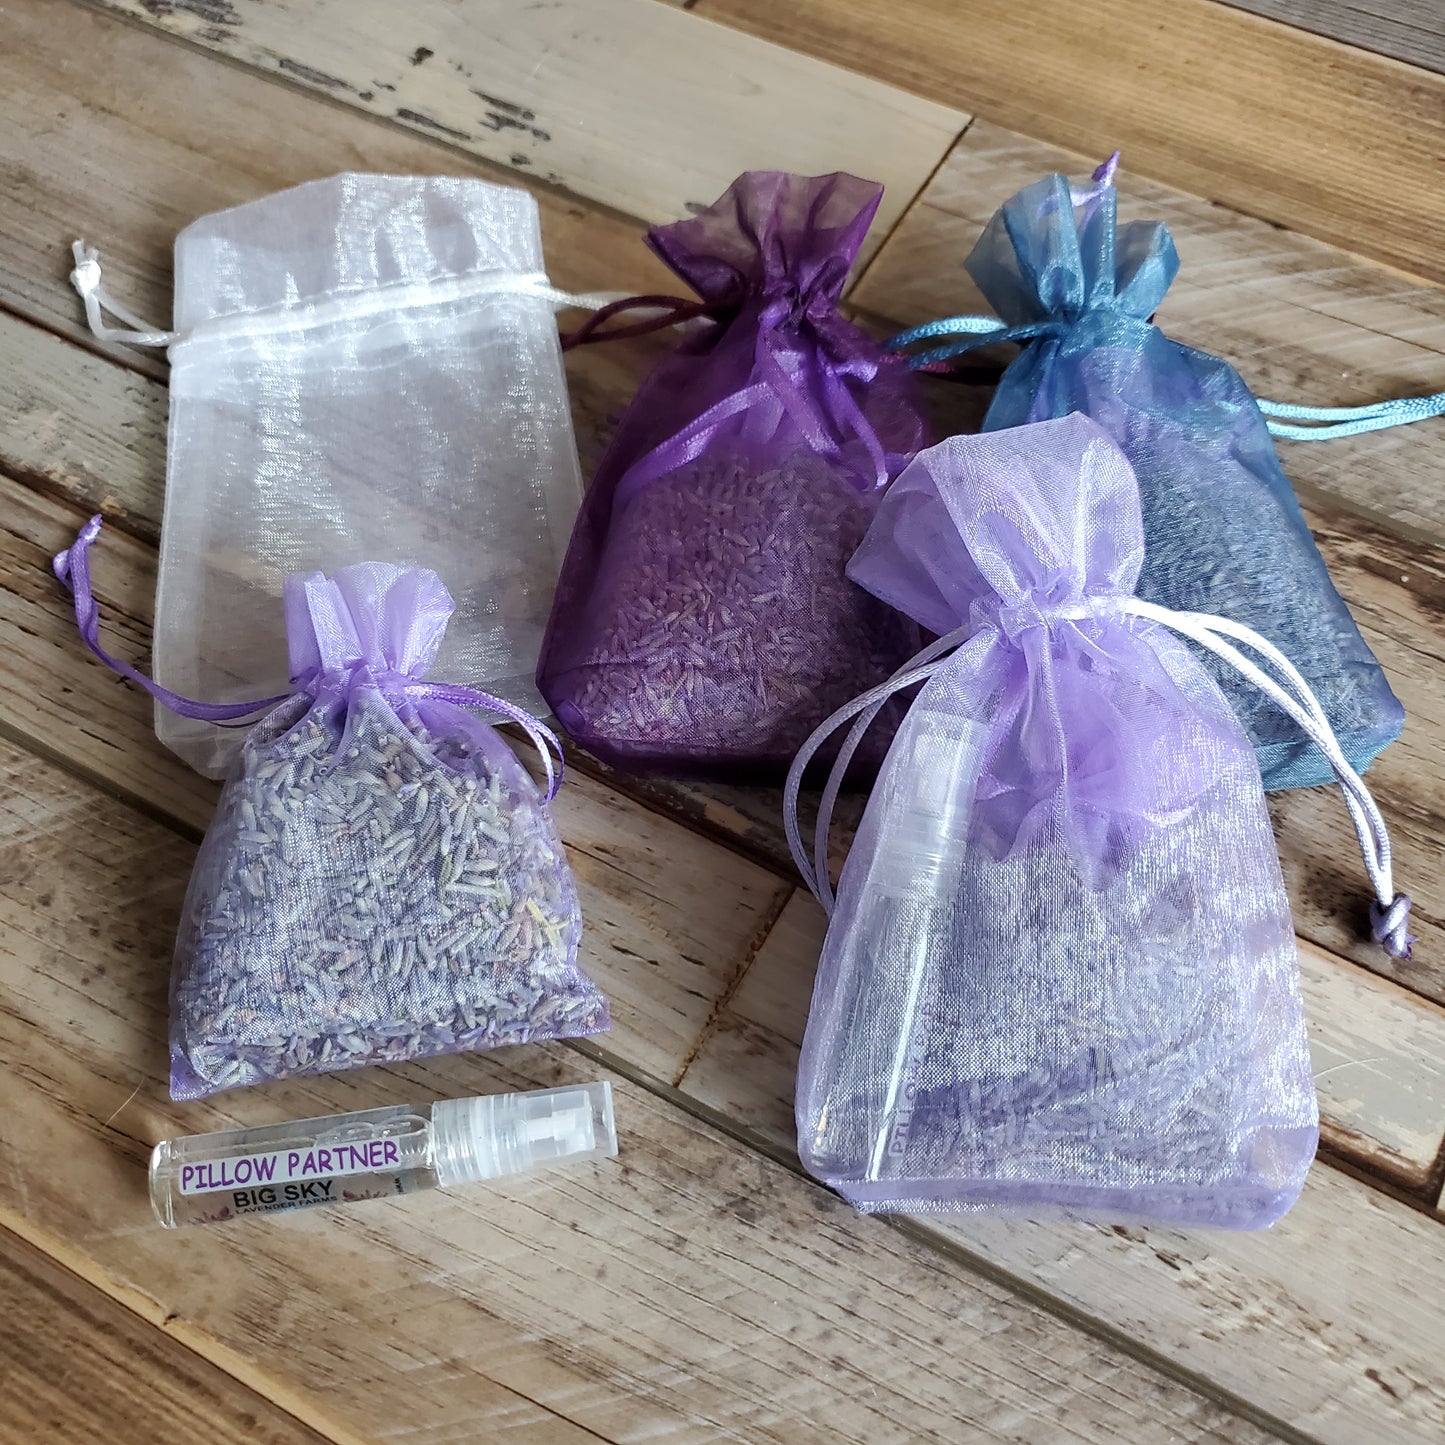 lavender-sachet-mix-big-sky-lavender-farms-web1200